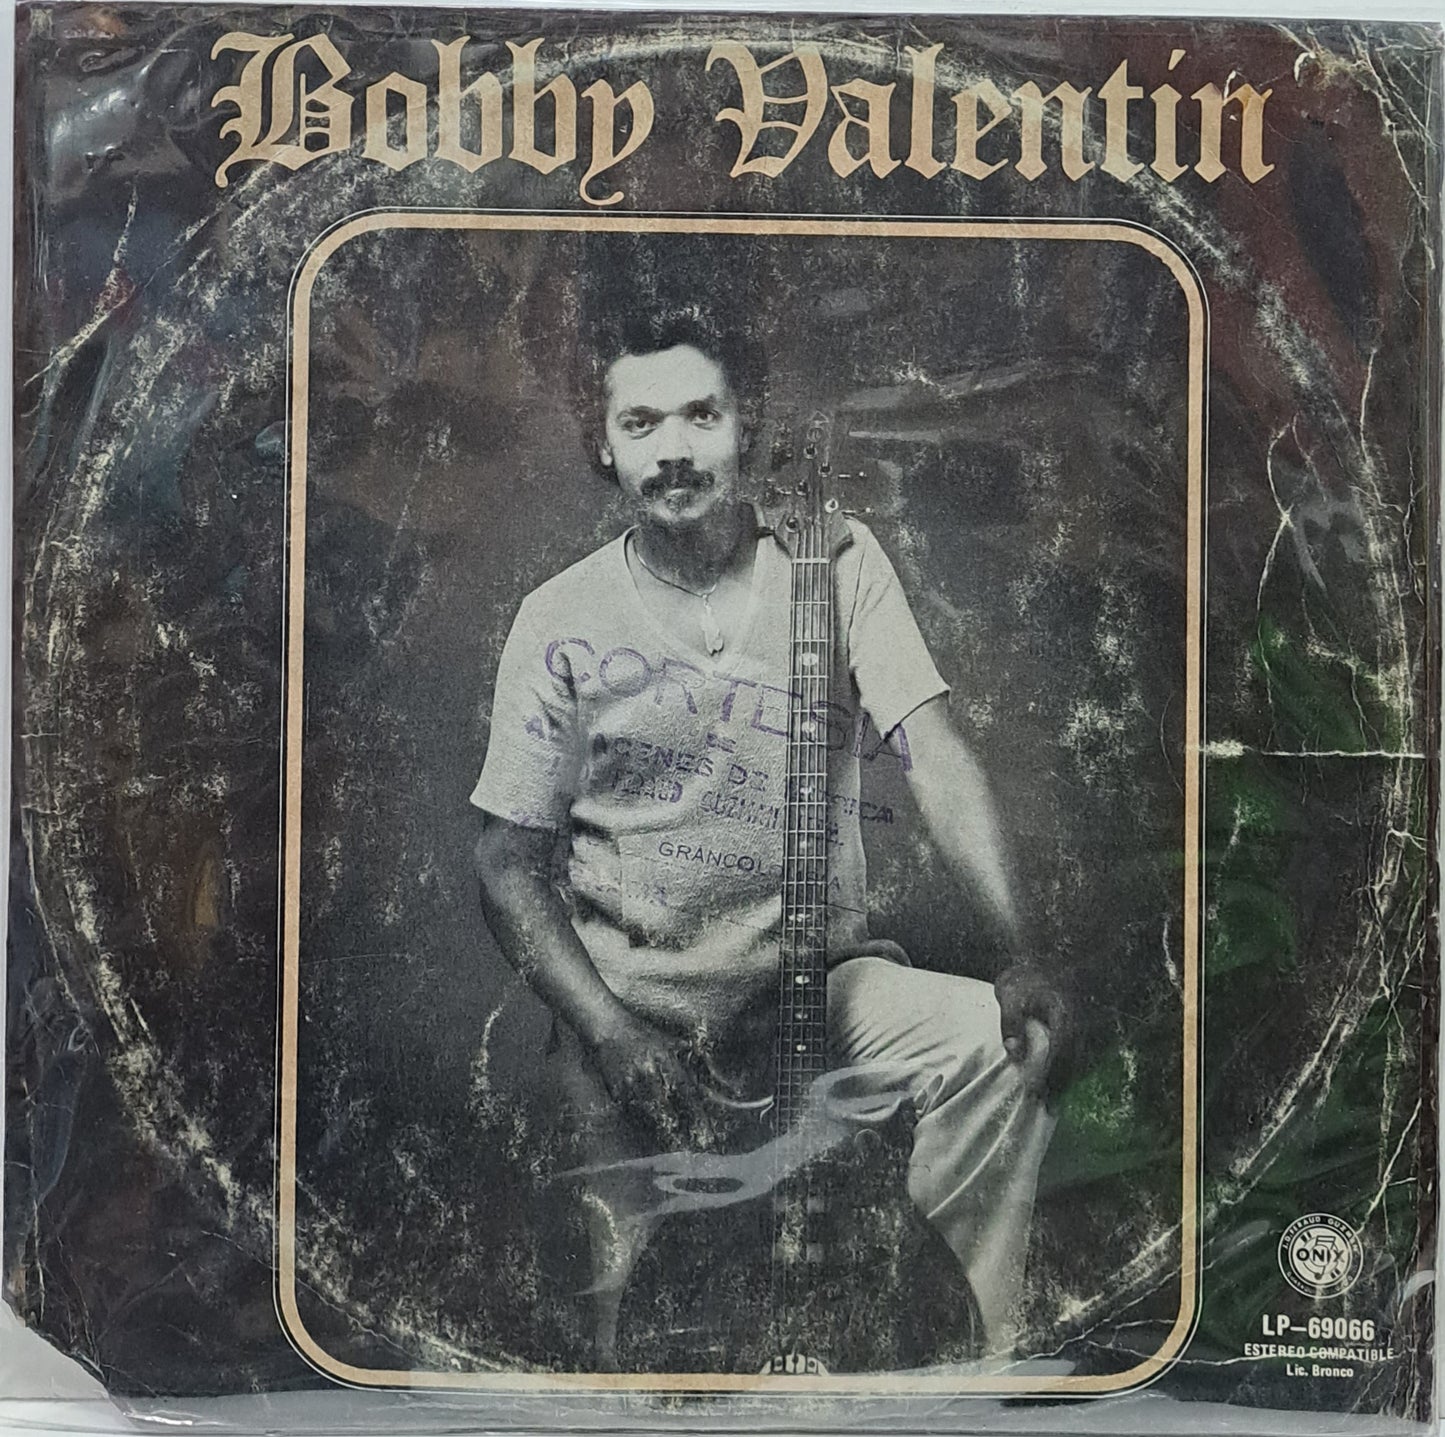 BOBBY VALENTIN - LP